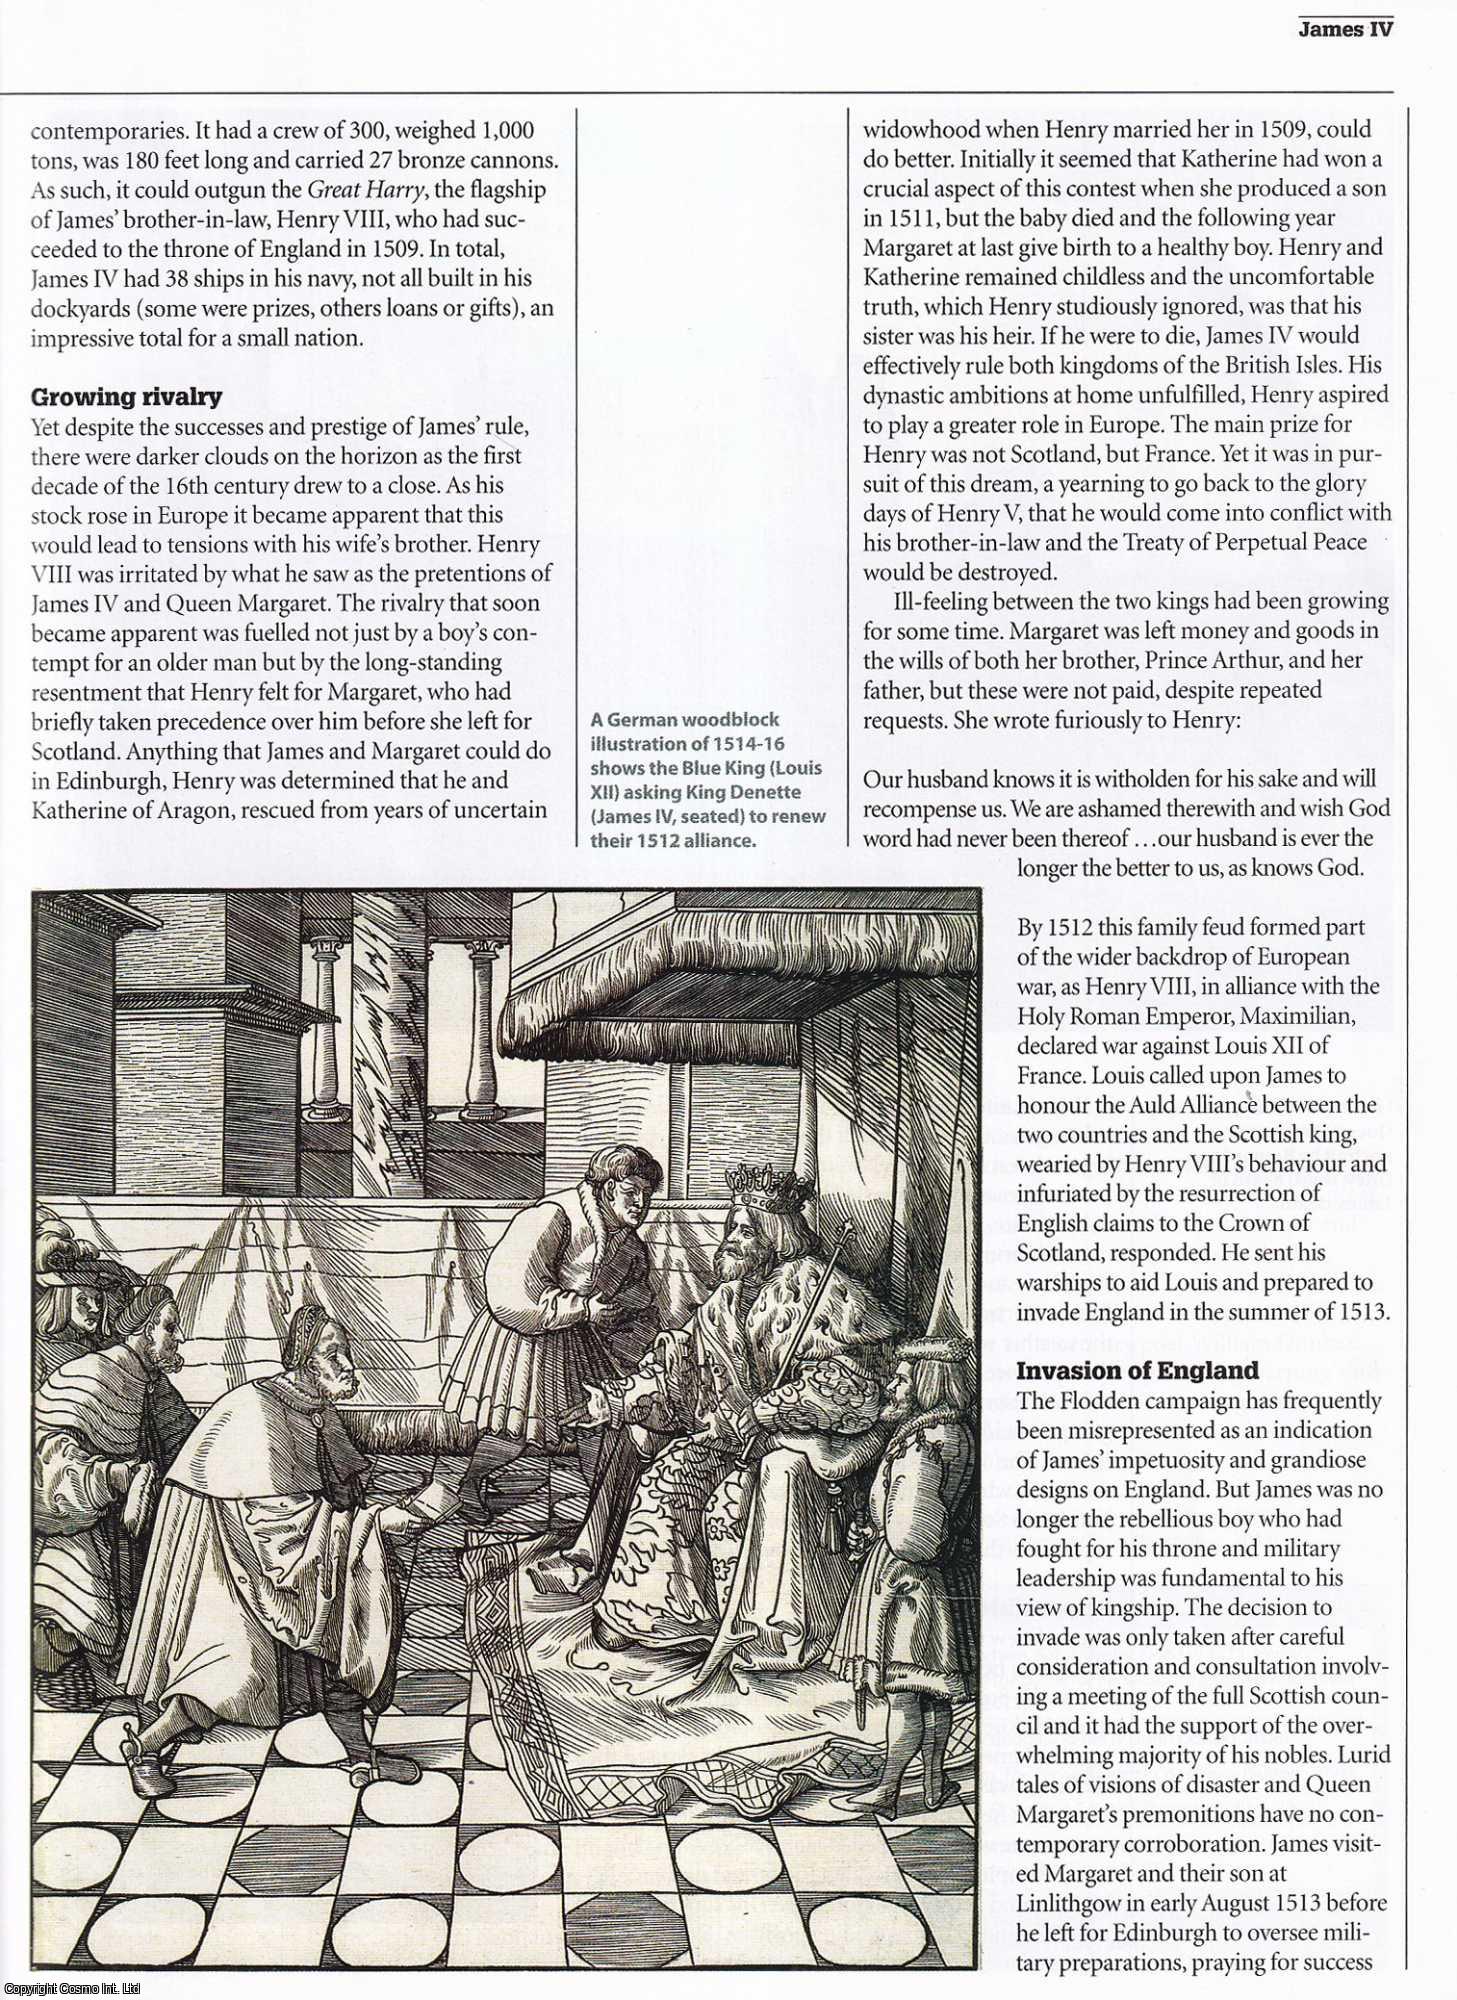 Linda Porter - James IV, Renaissance Monarch. An original article from History Today magazine, 2013.